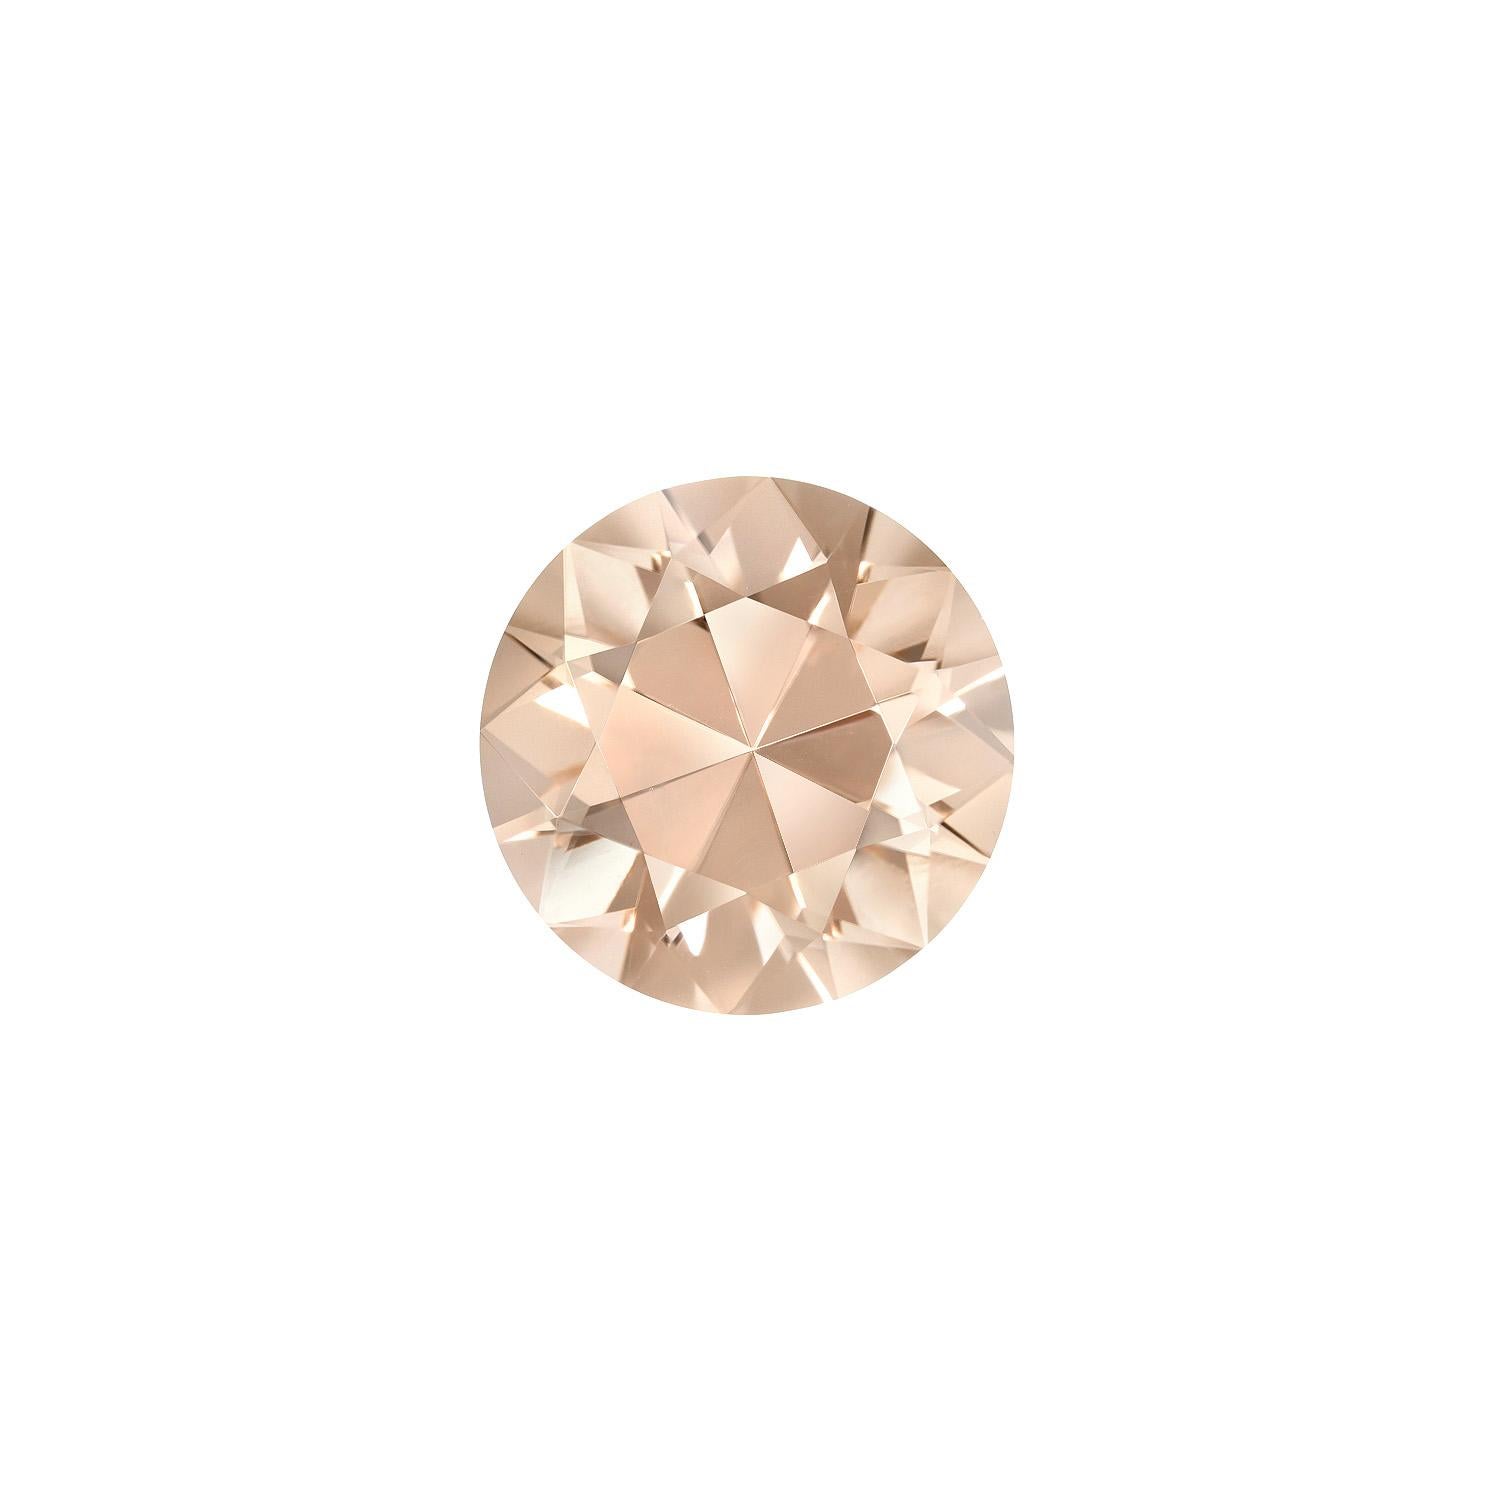 Contemporary Copper Tourmaline Ring Gem 3.15 Carat Round Unset Loose Gemstone